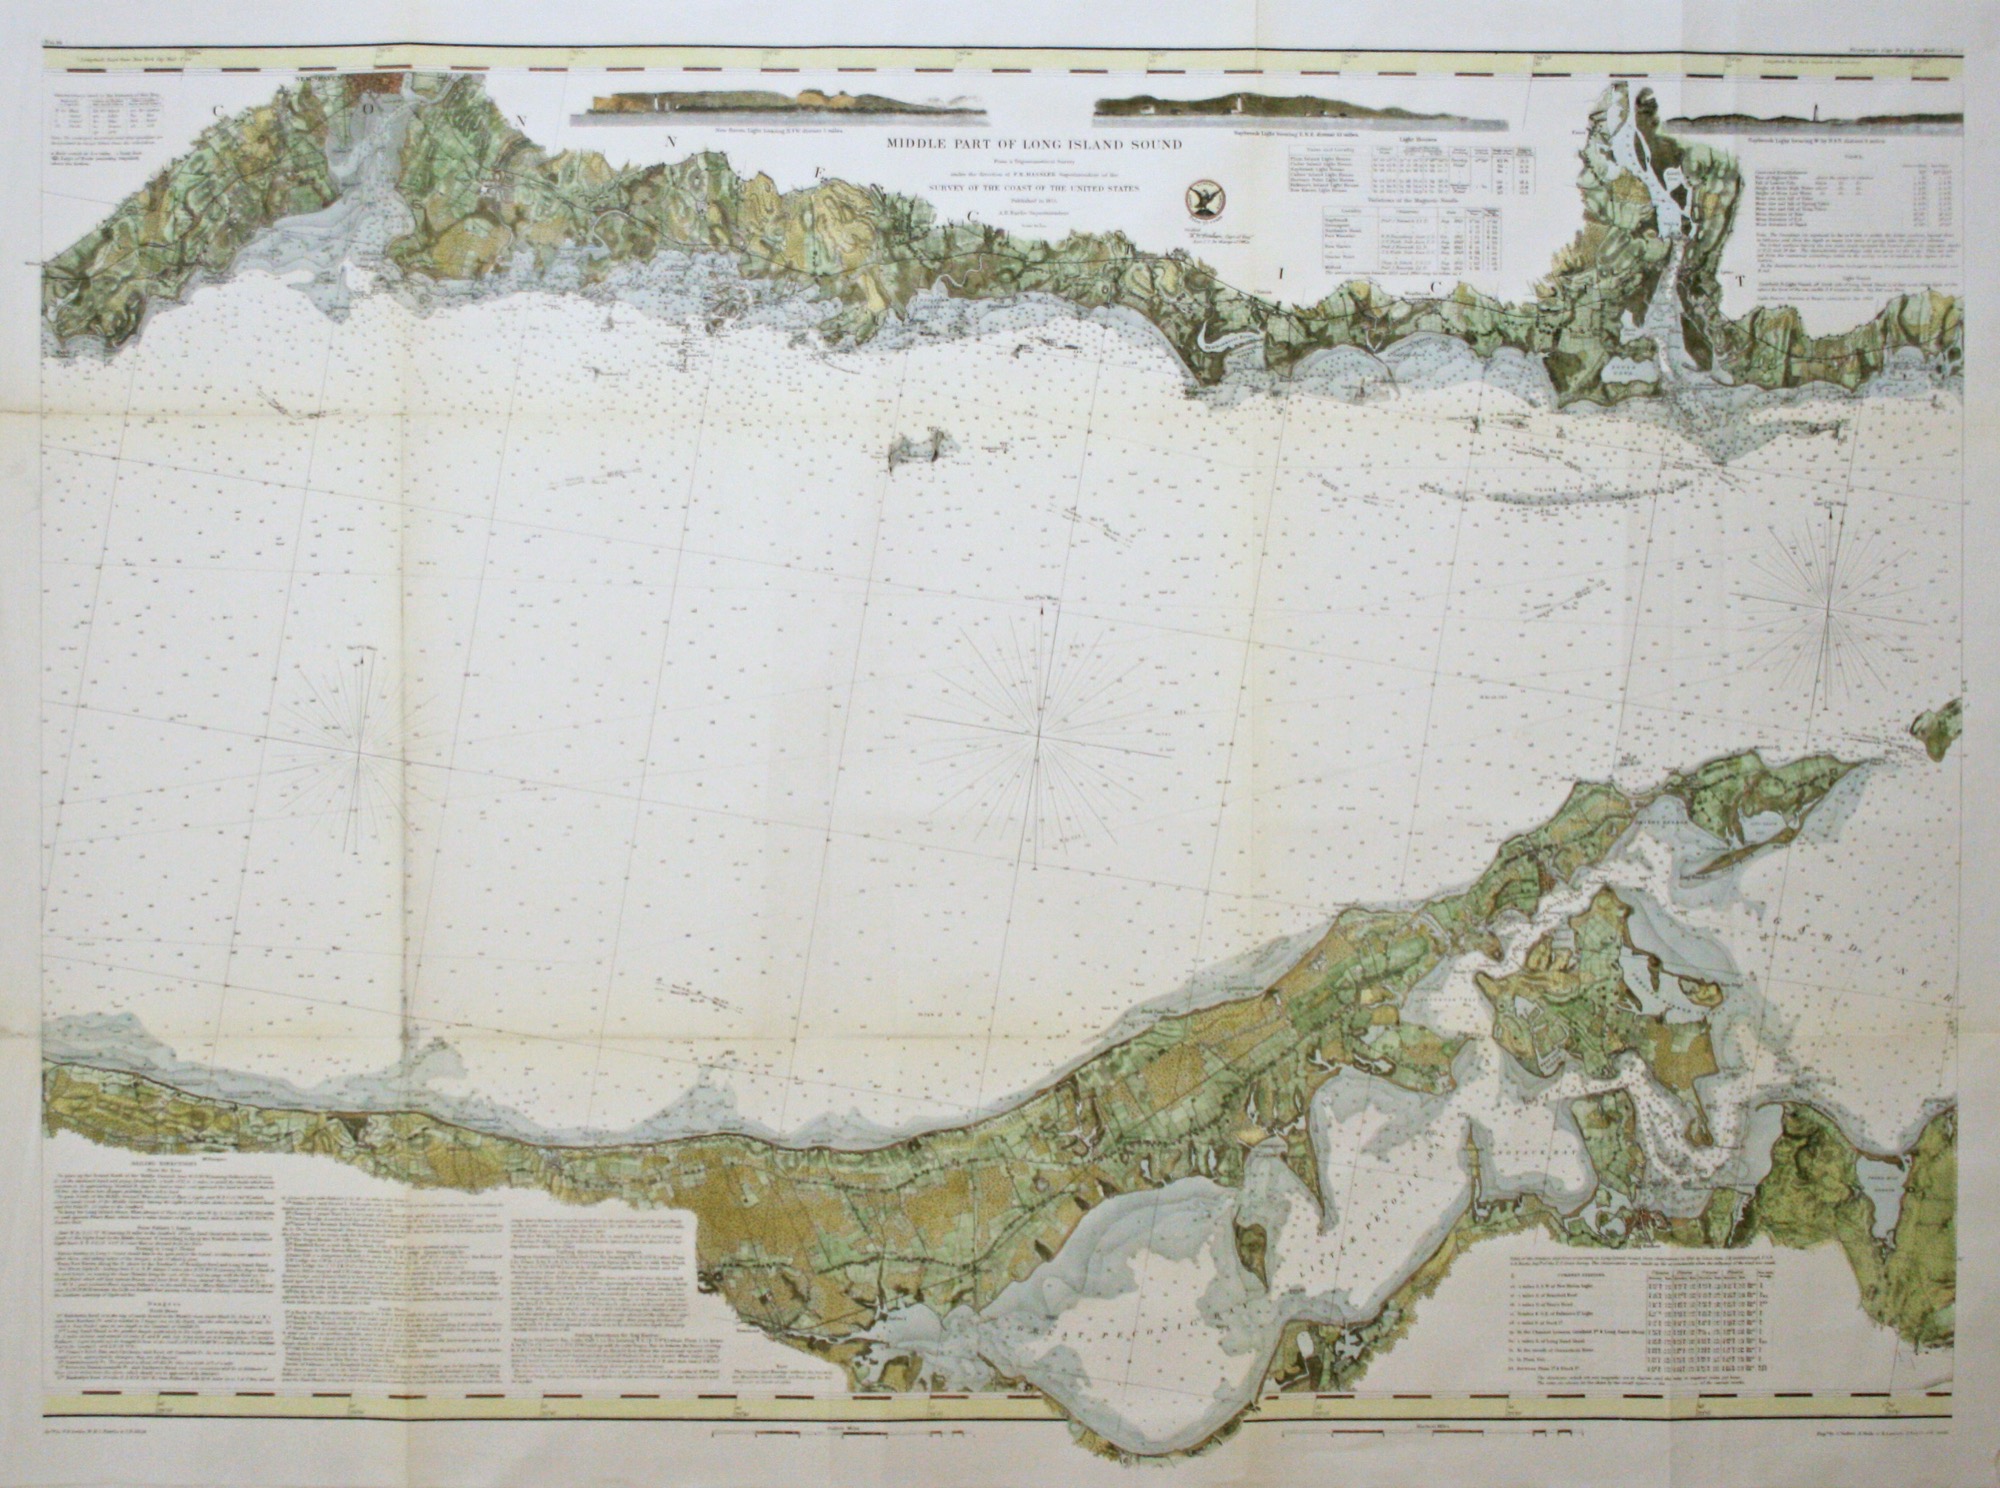 Long Island Sound 1855 (2 of 3)